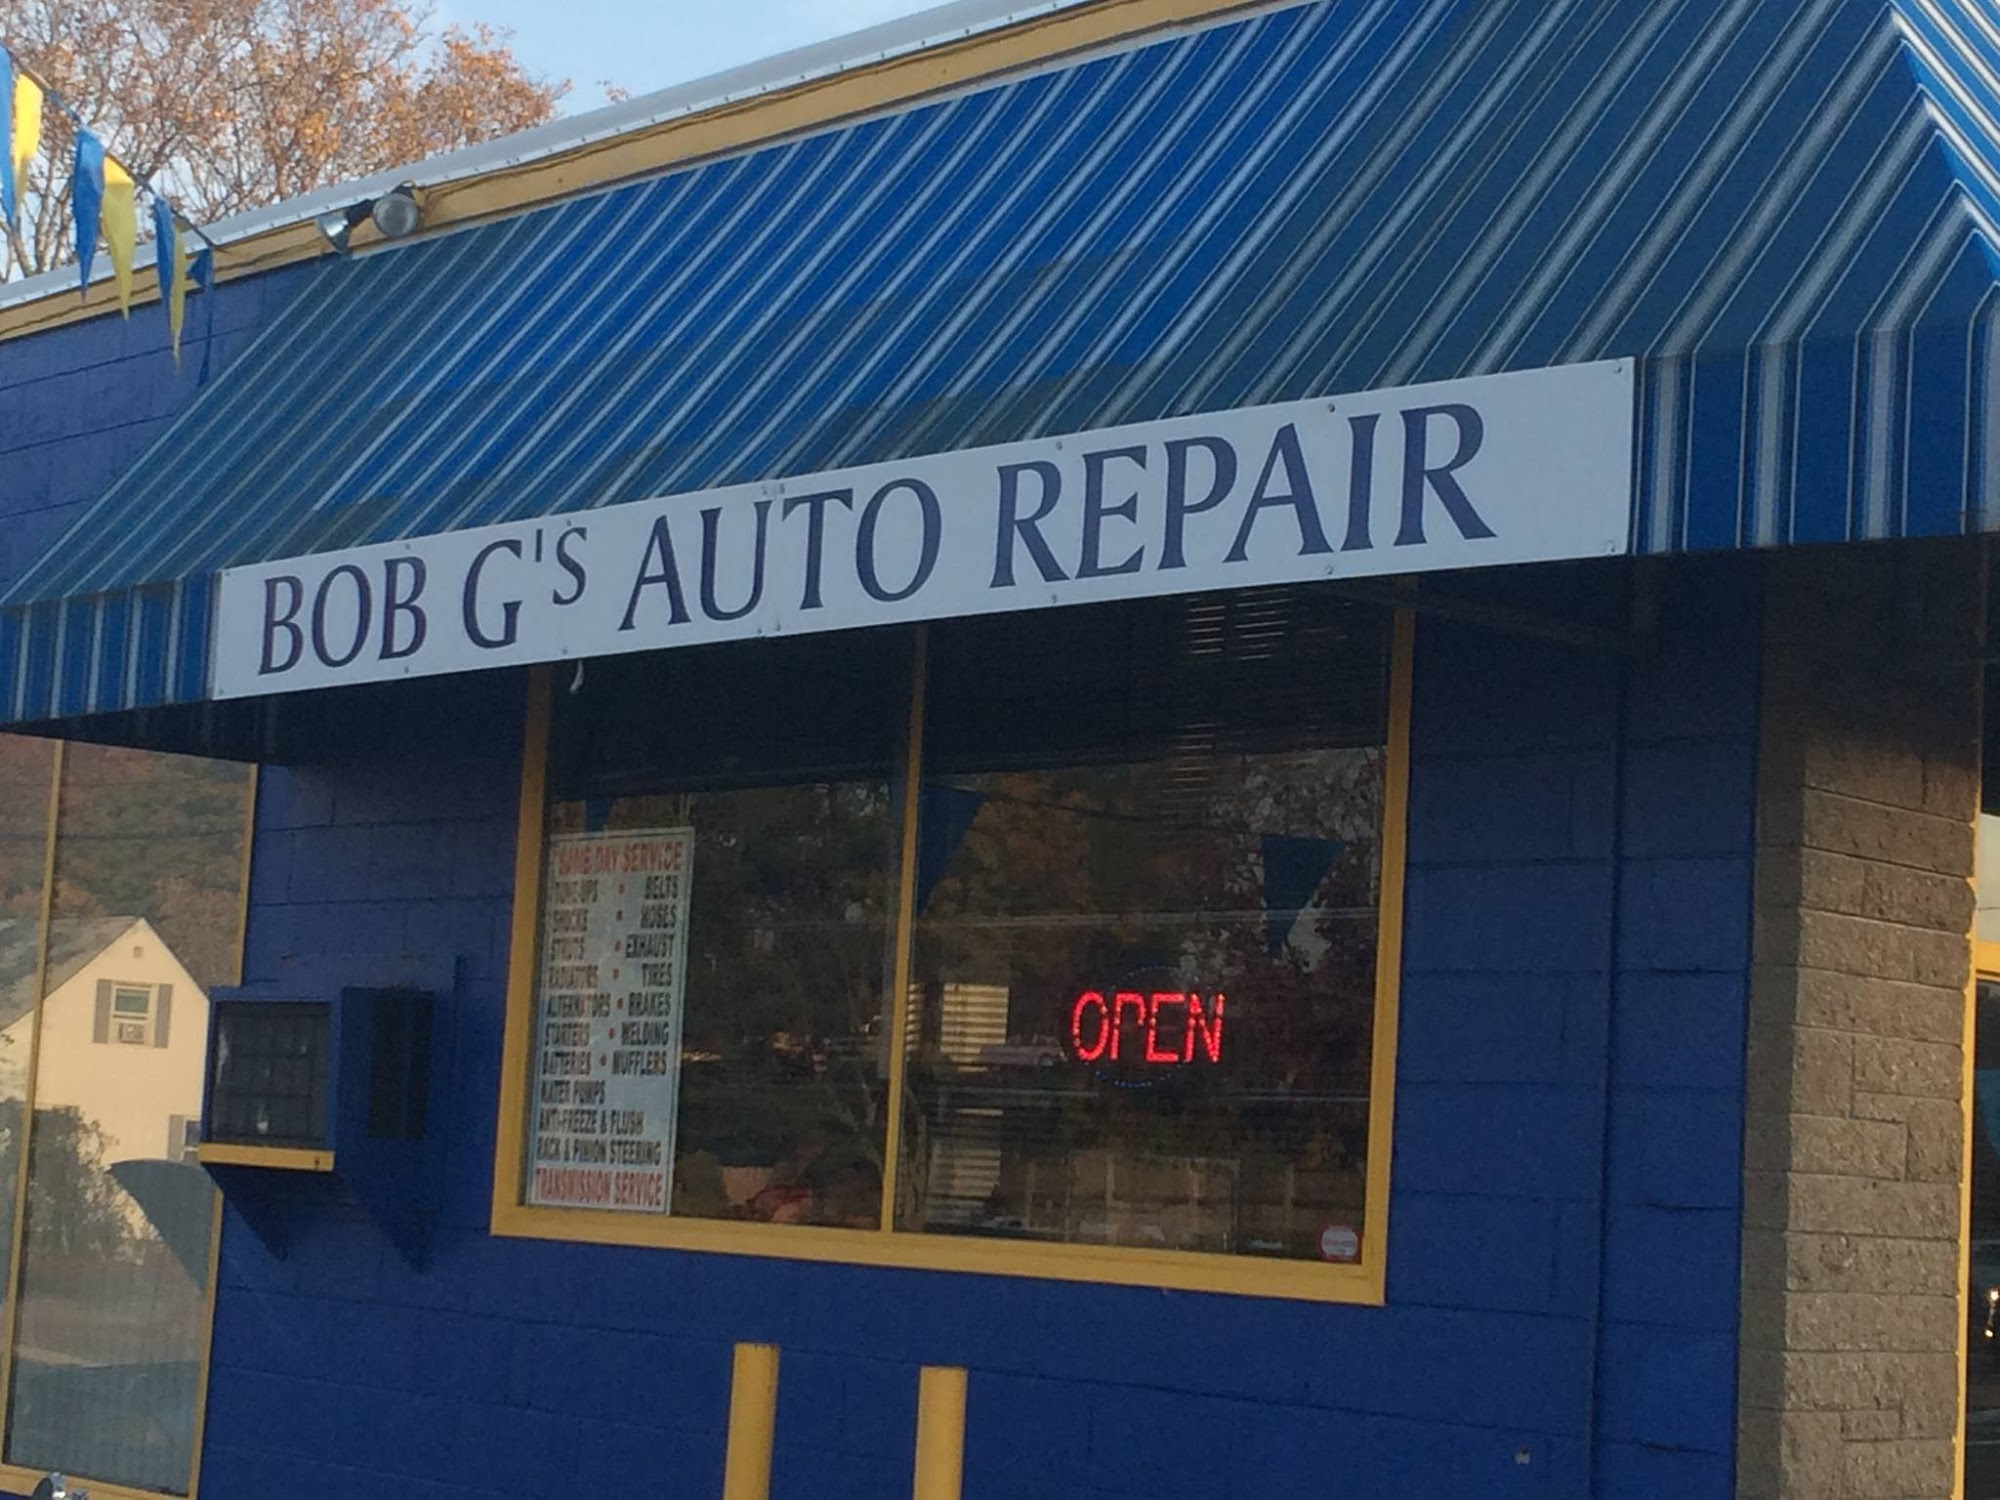 Bob G's Auto Repair